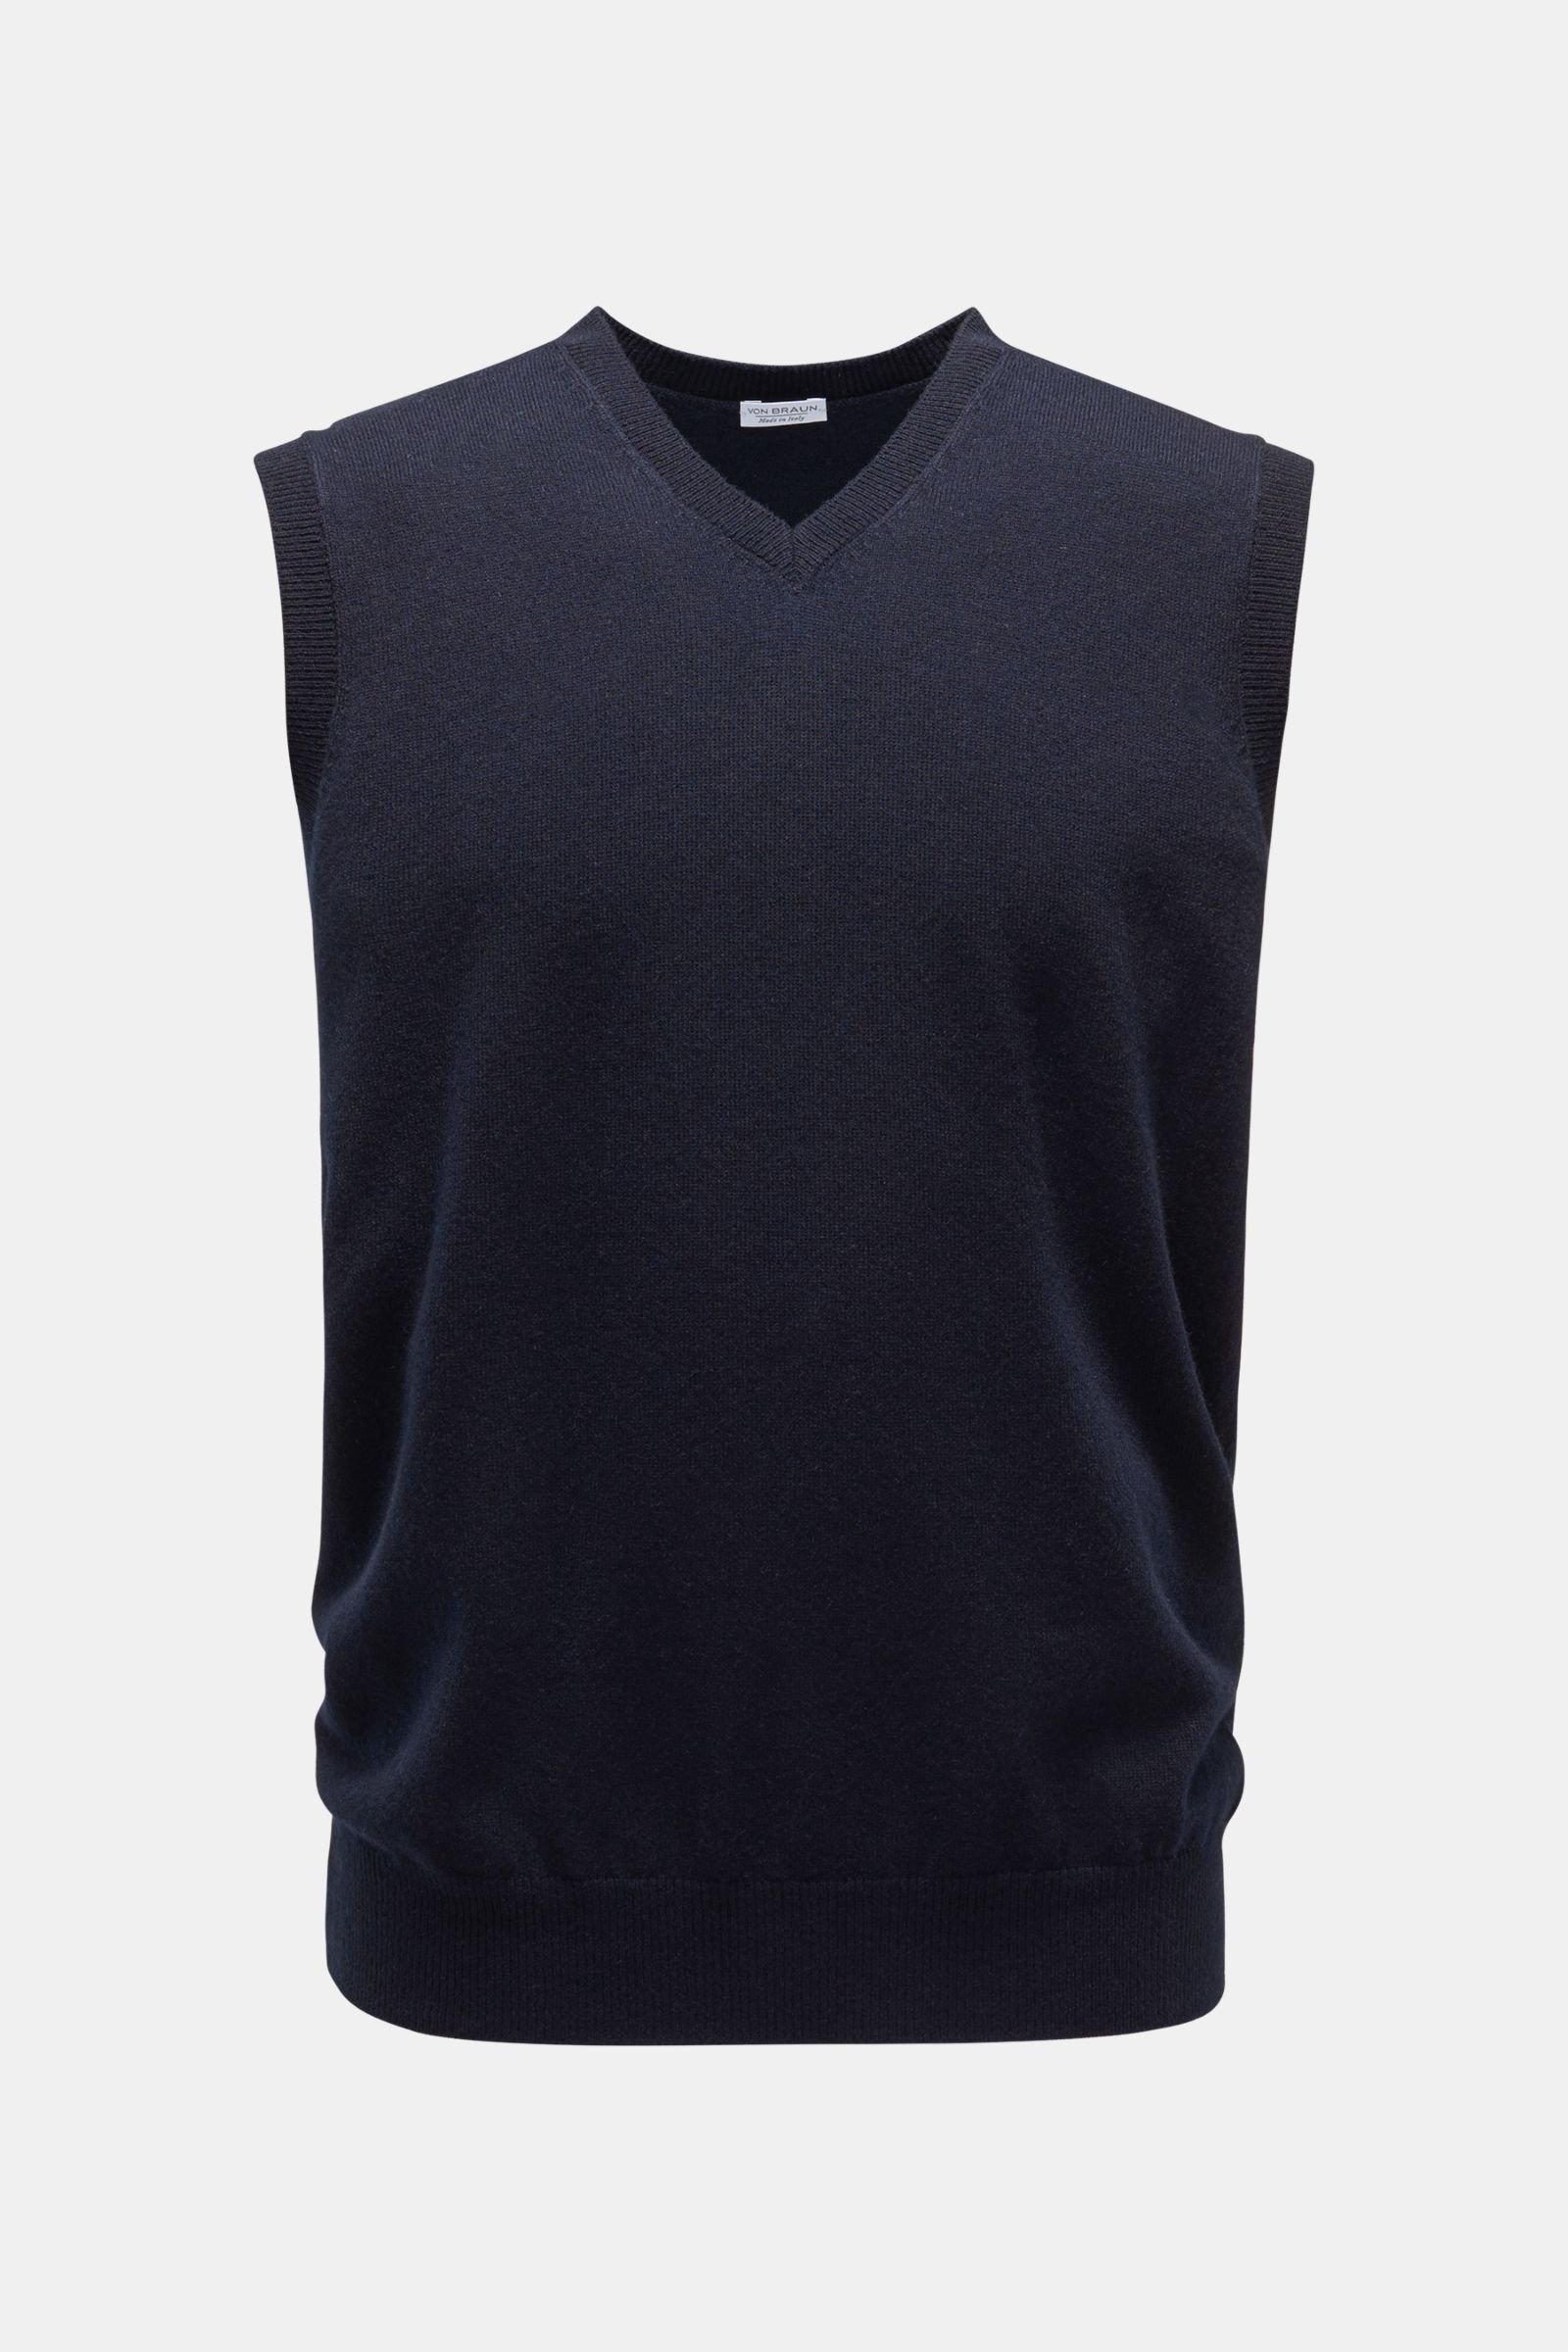 Cashmere V-neck sweater vest dark navy